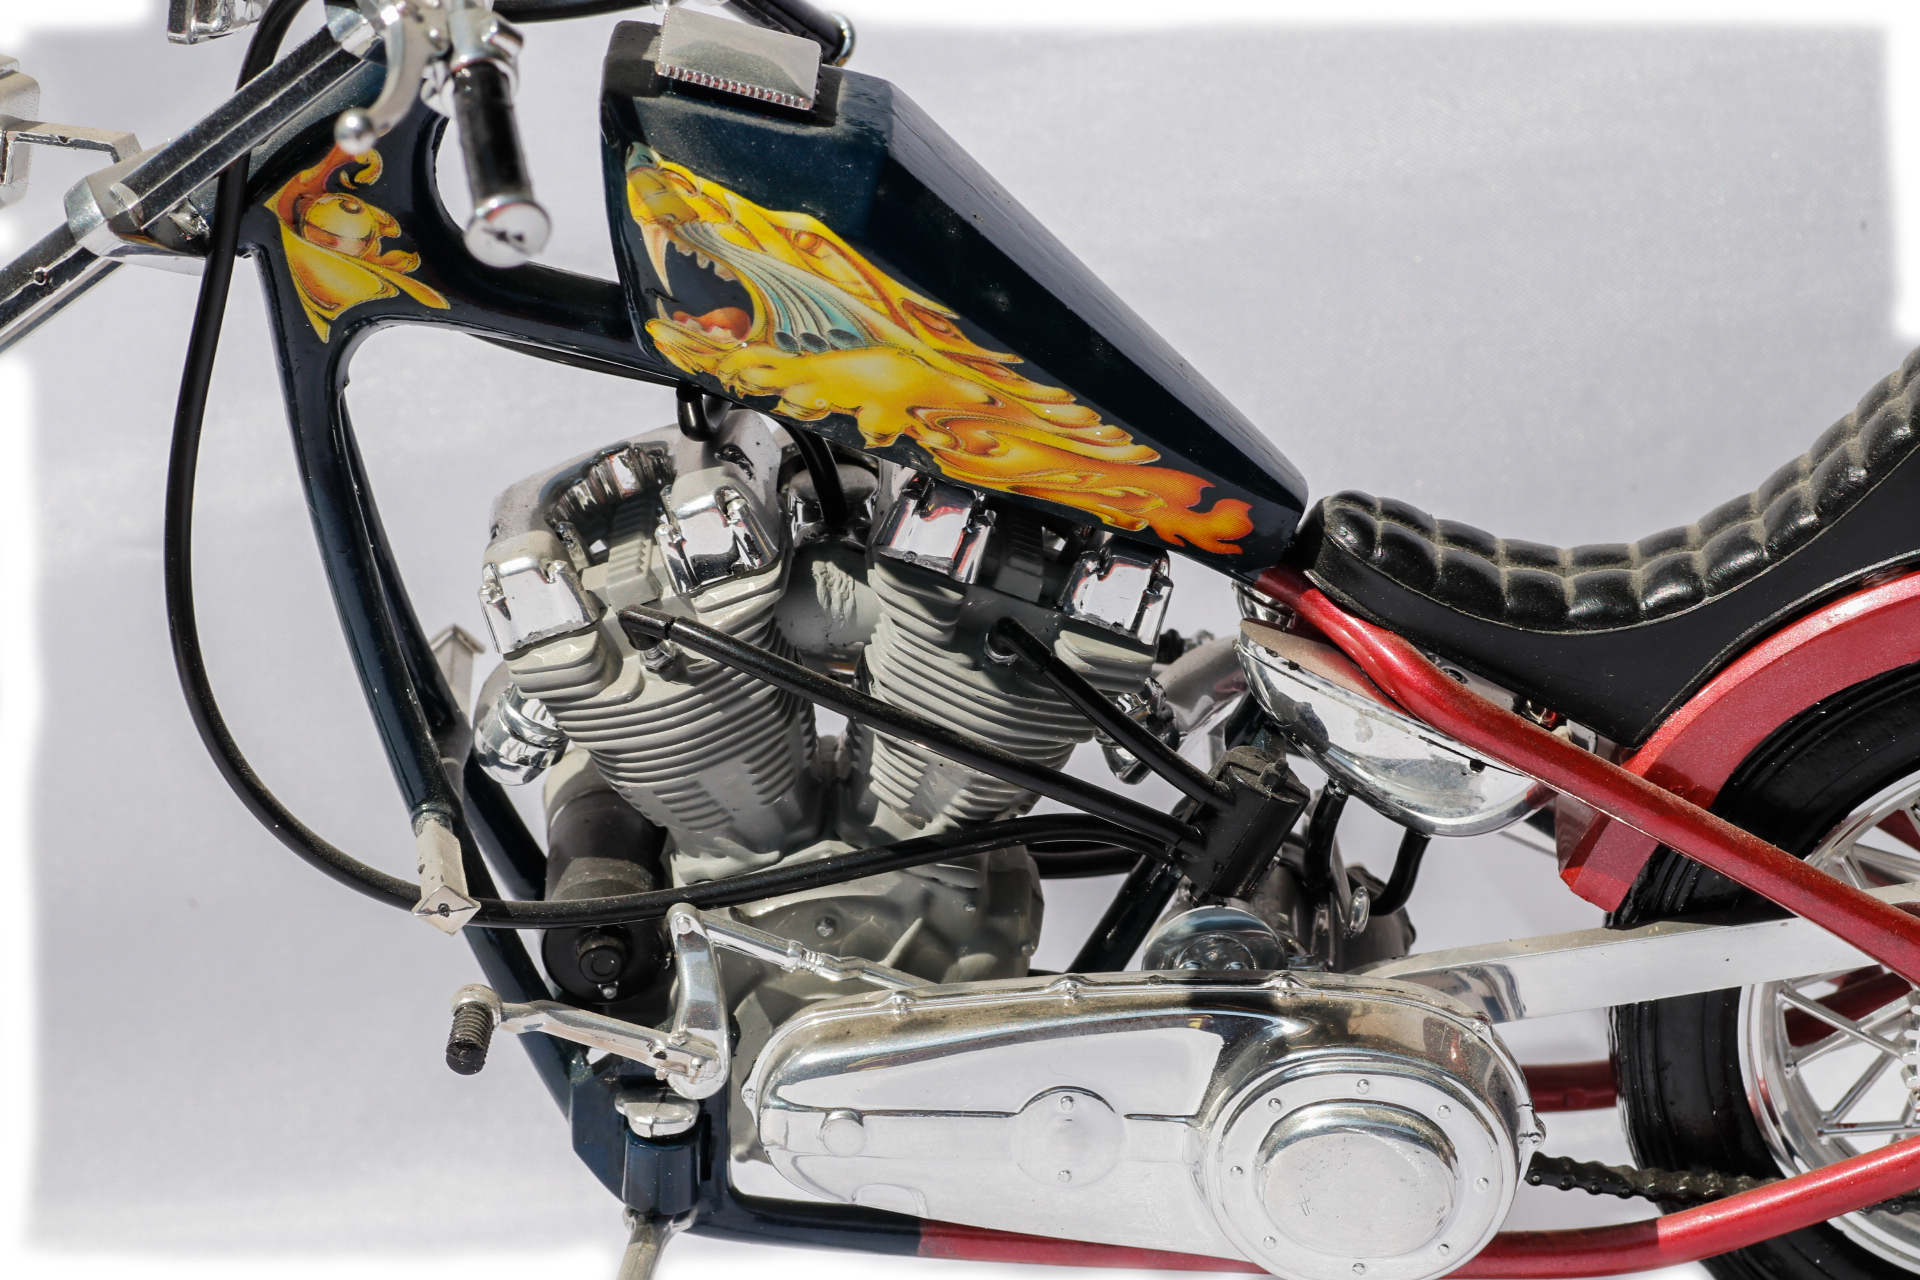 Revell Harley Davidson Chopper